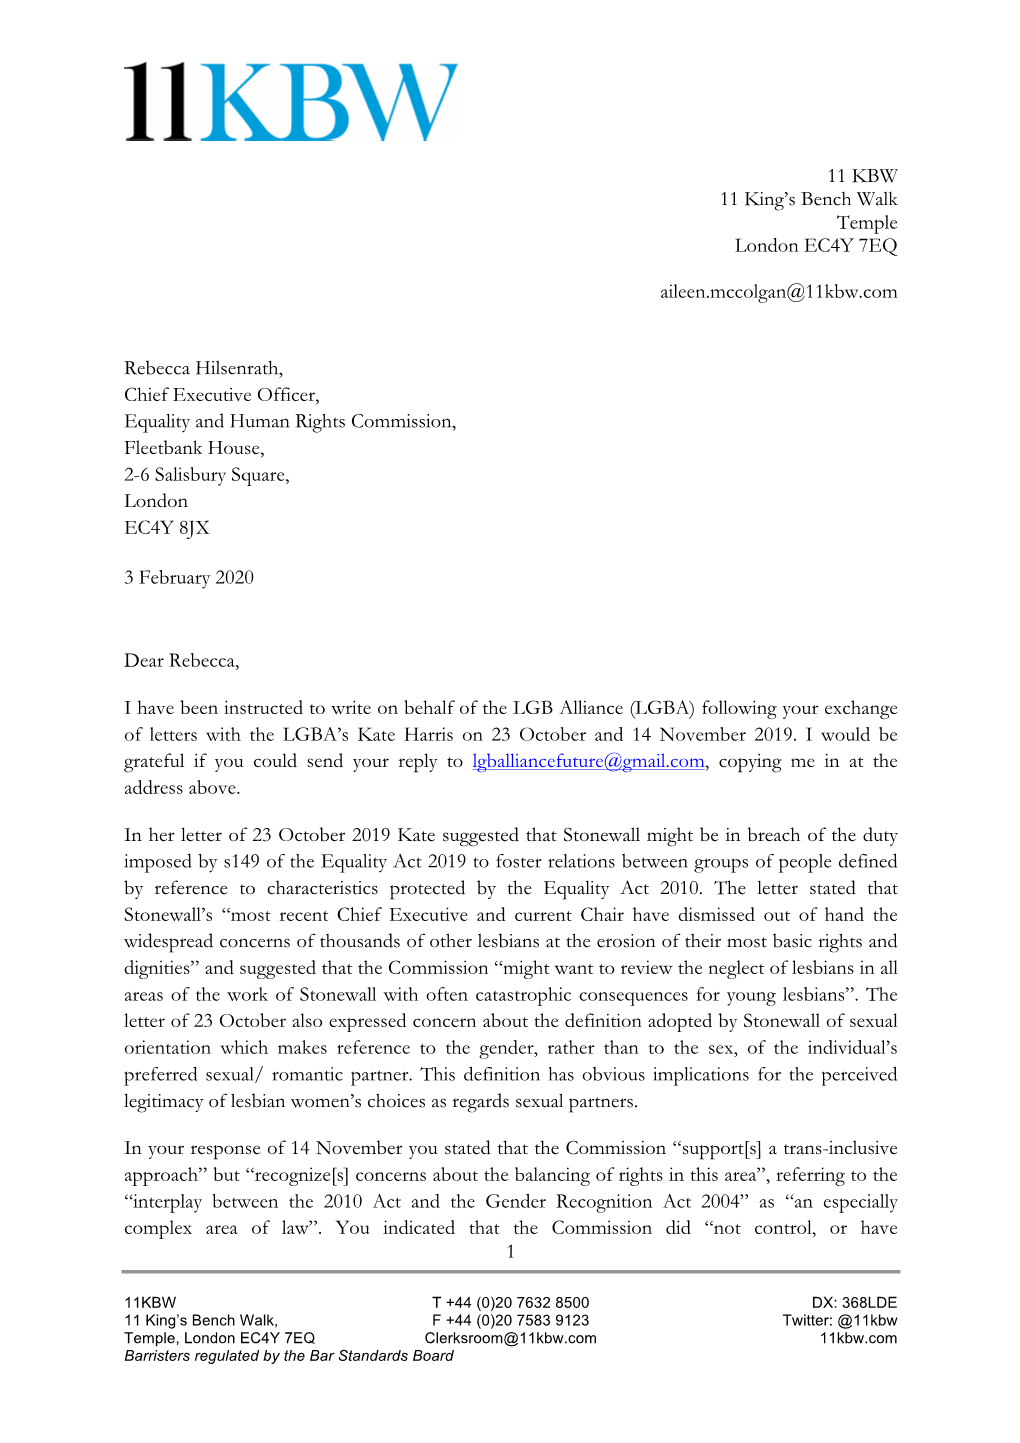 LBGA EHRC Letter 3 February